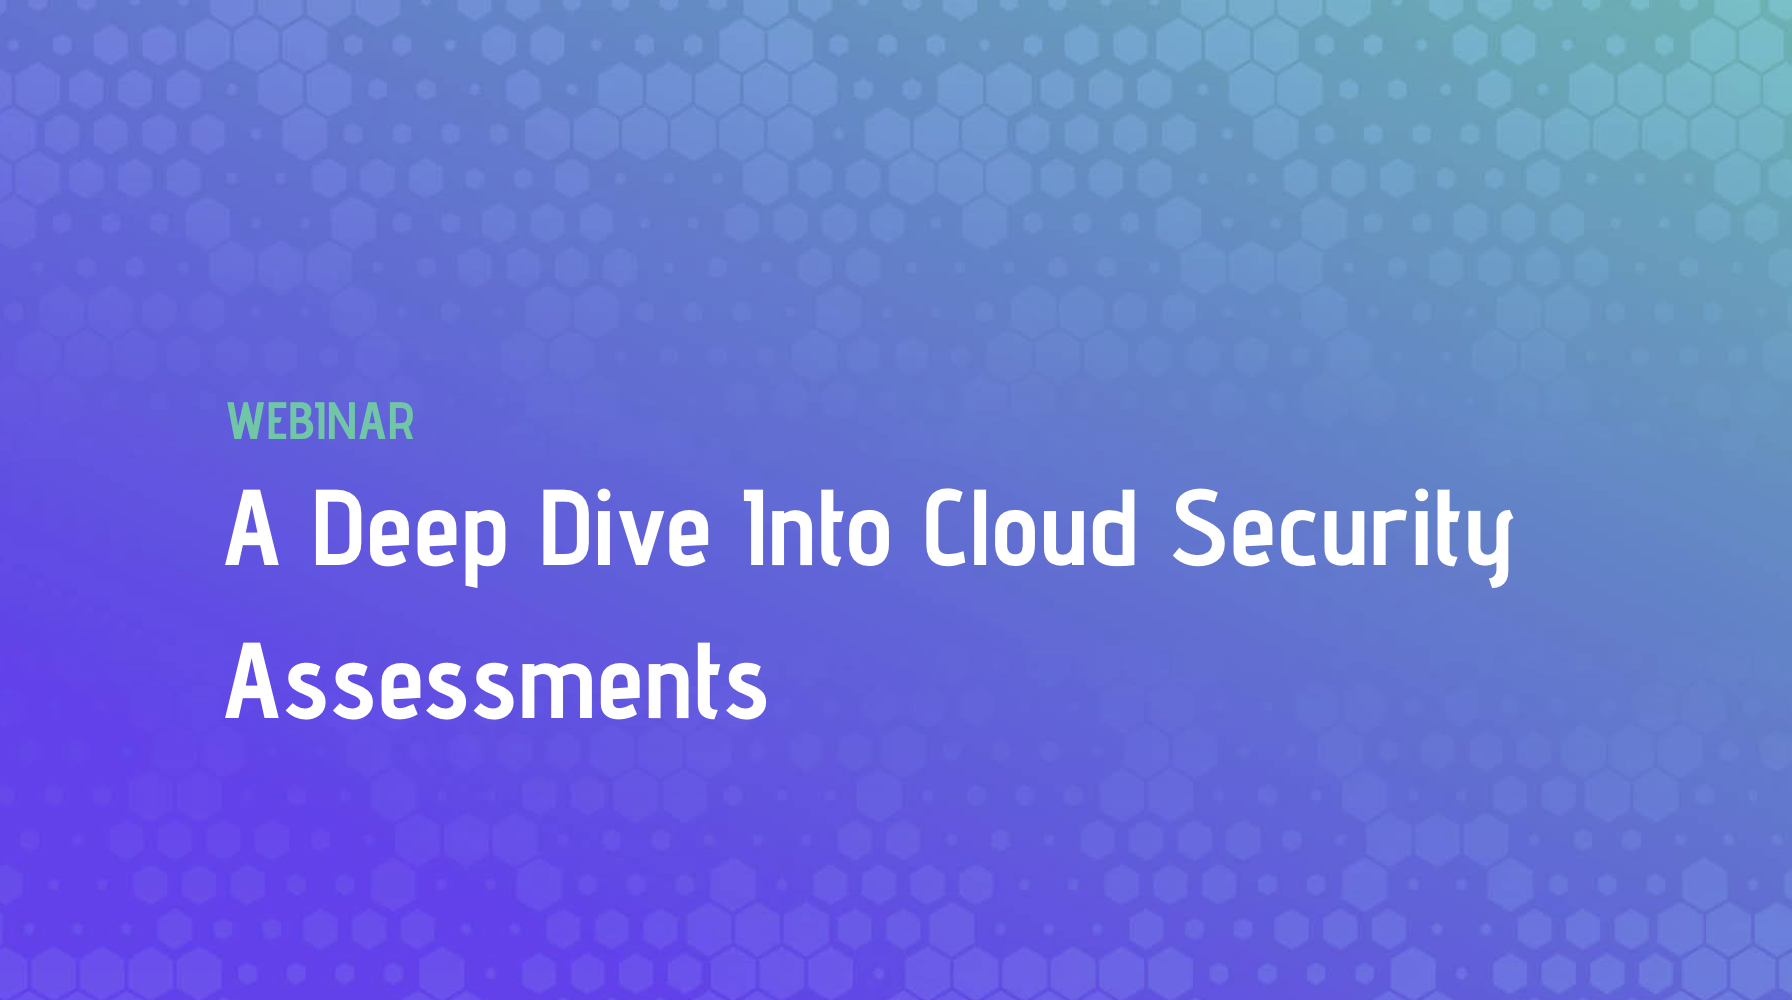 A Deep Dive Into Cloud Security Assessments